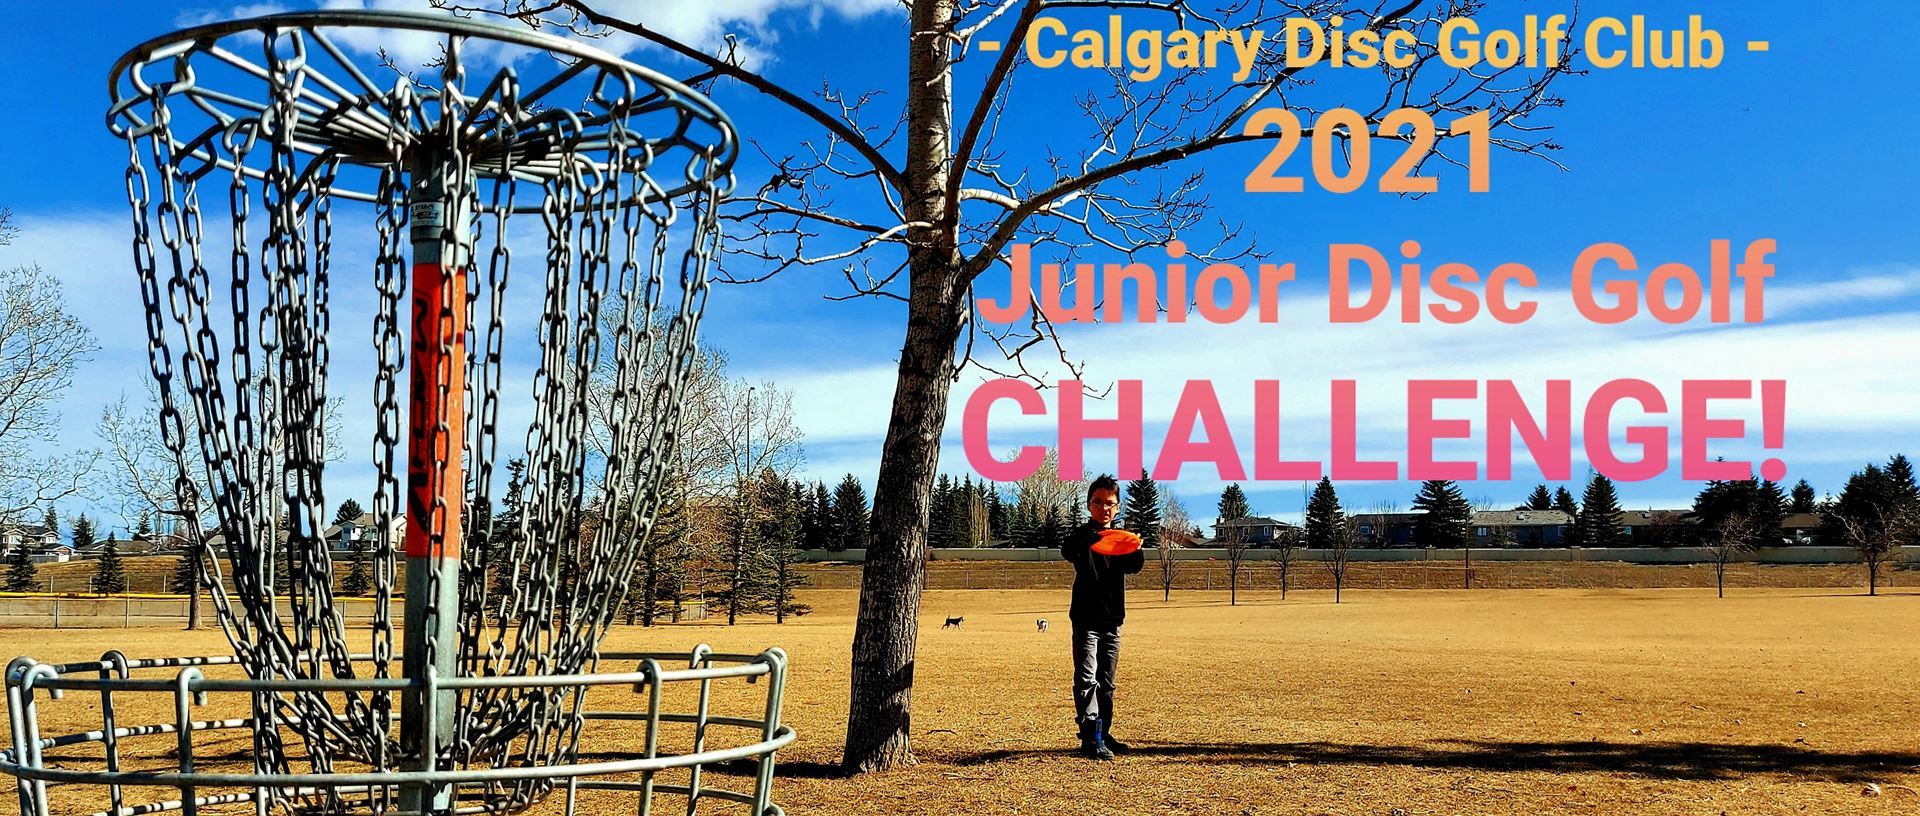 2021 Junior Disc Golf Challenge - April 17/18